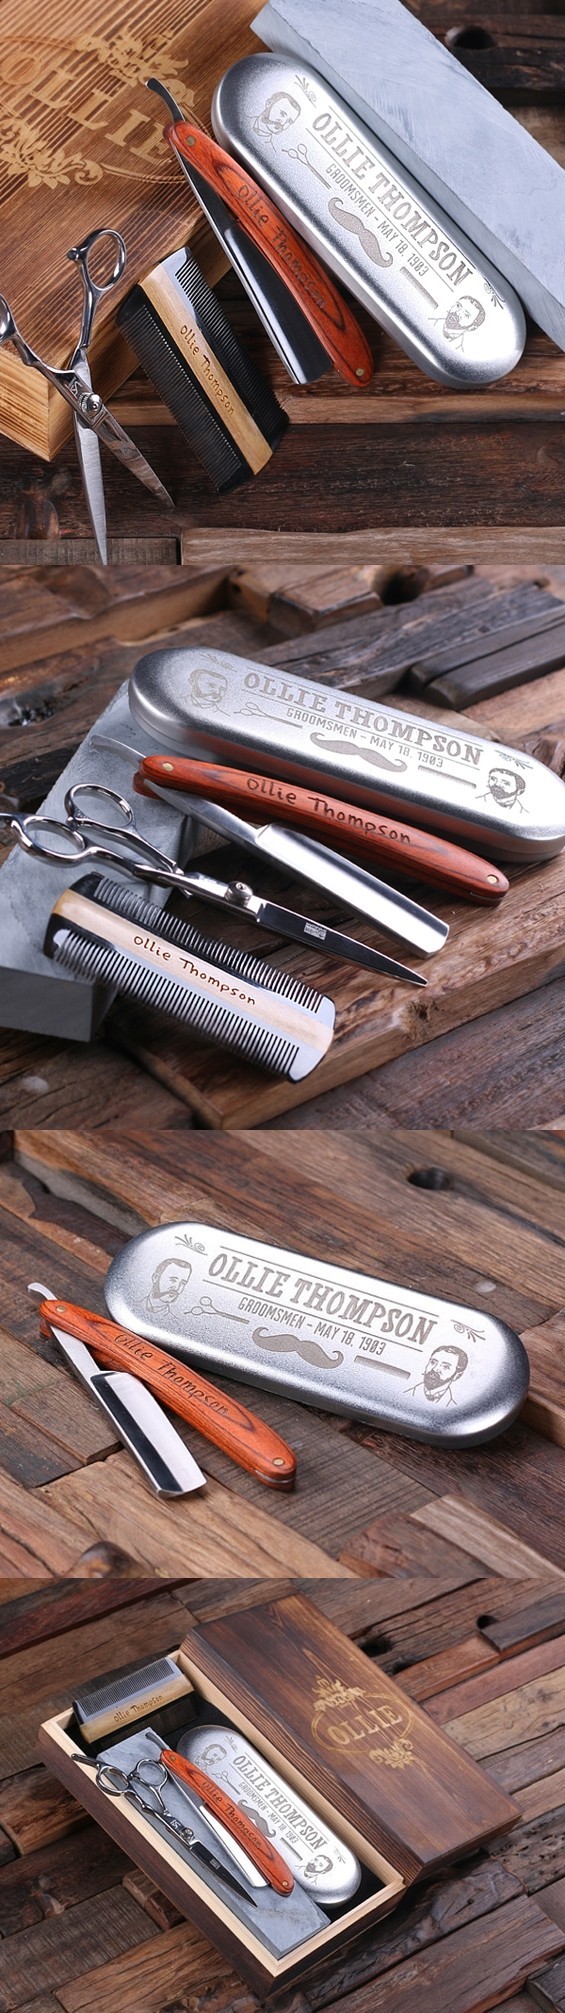 Personalized Barber Grooming Set w/ Straight Razor & Sharpening Stone